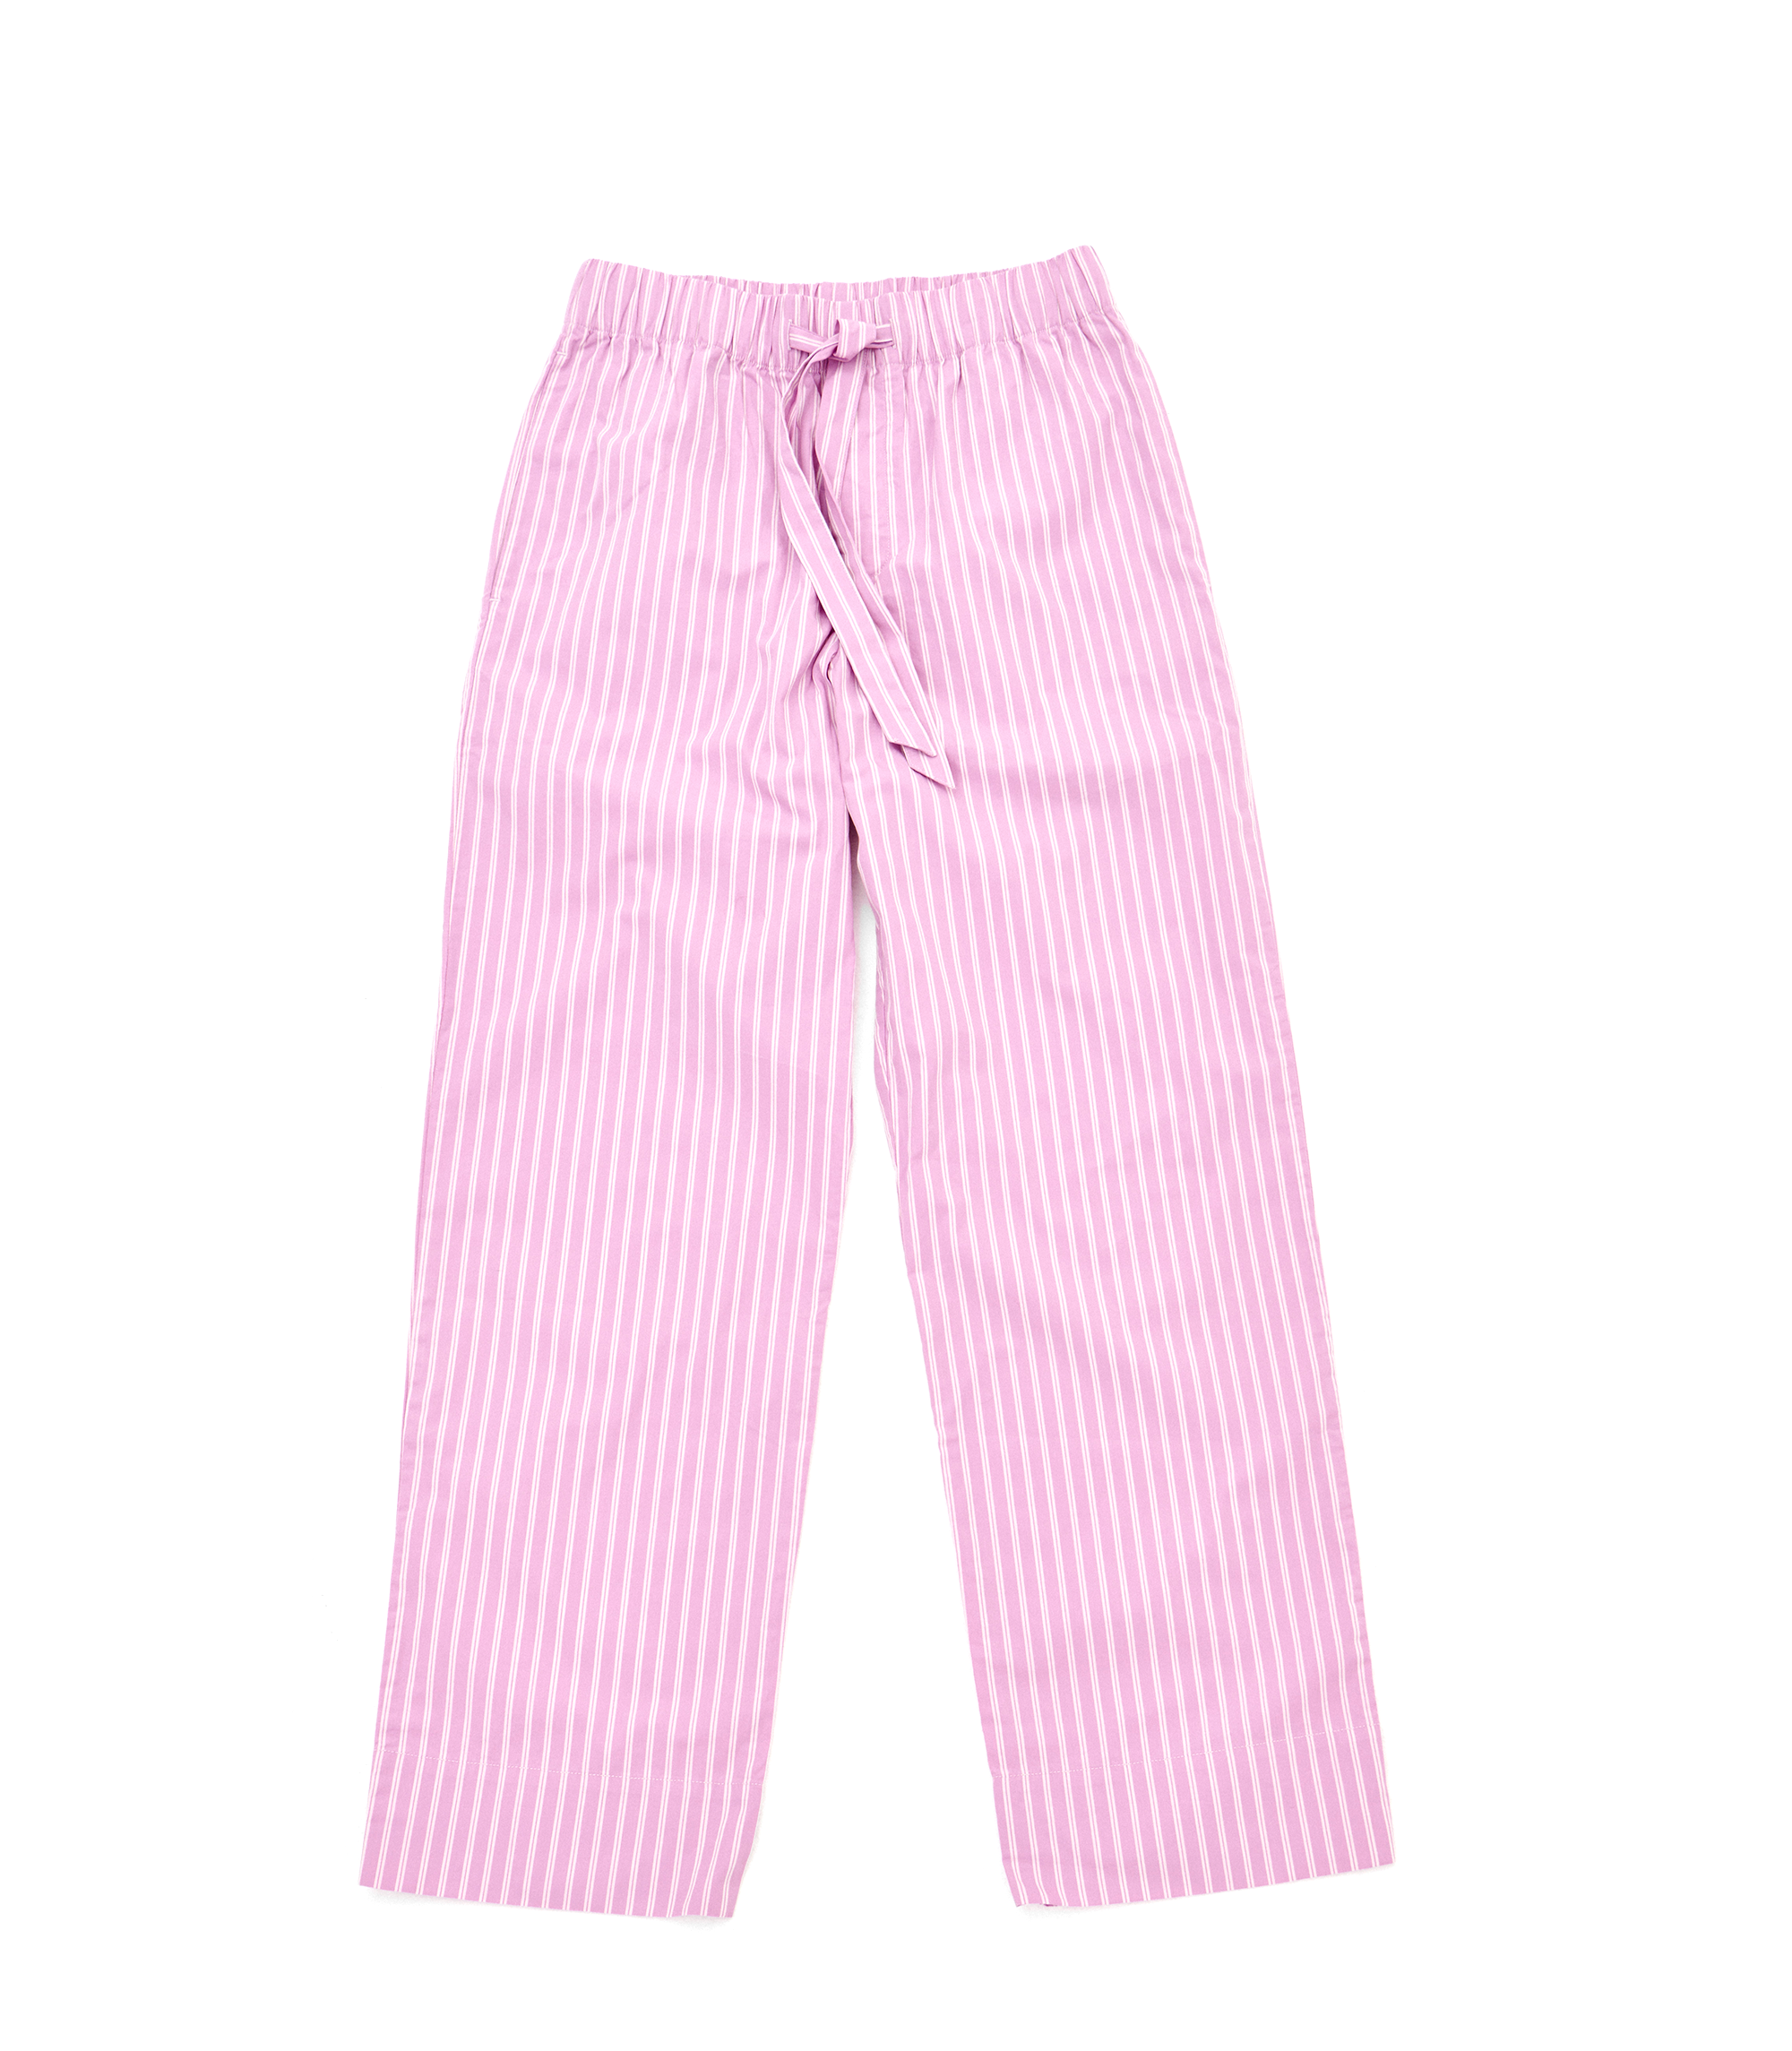 Sleepwear (Poplin) Pyjama Pant - Purple Pink